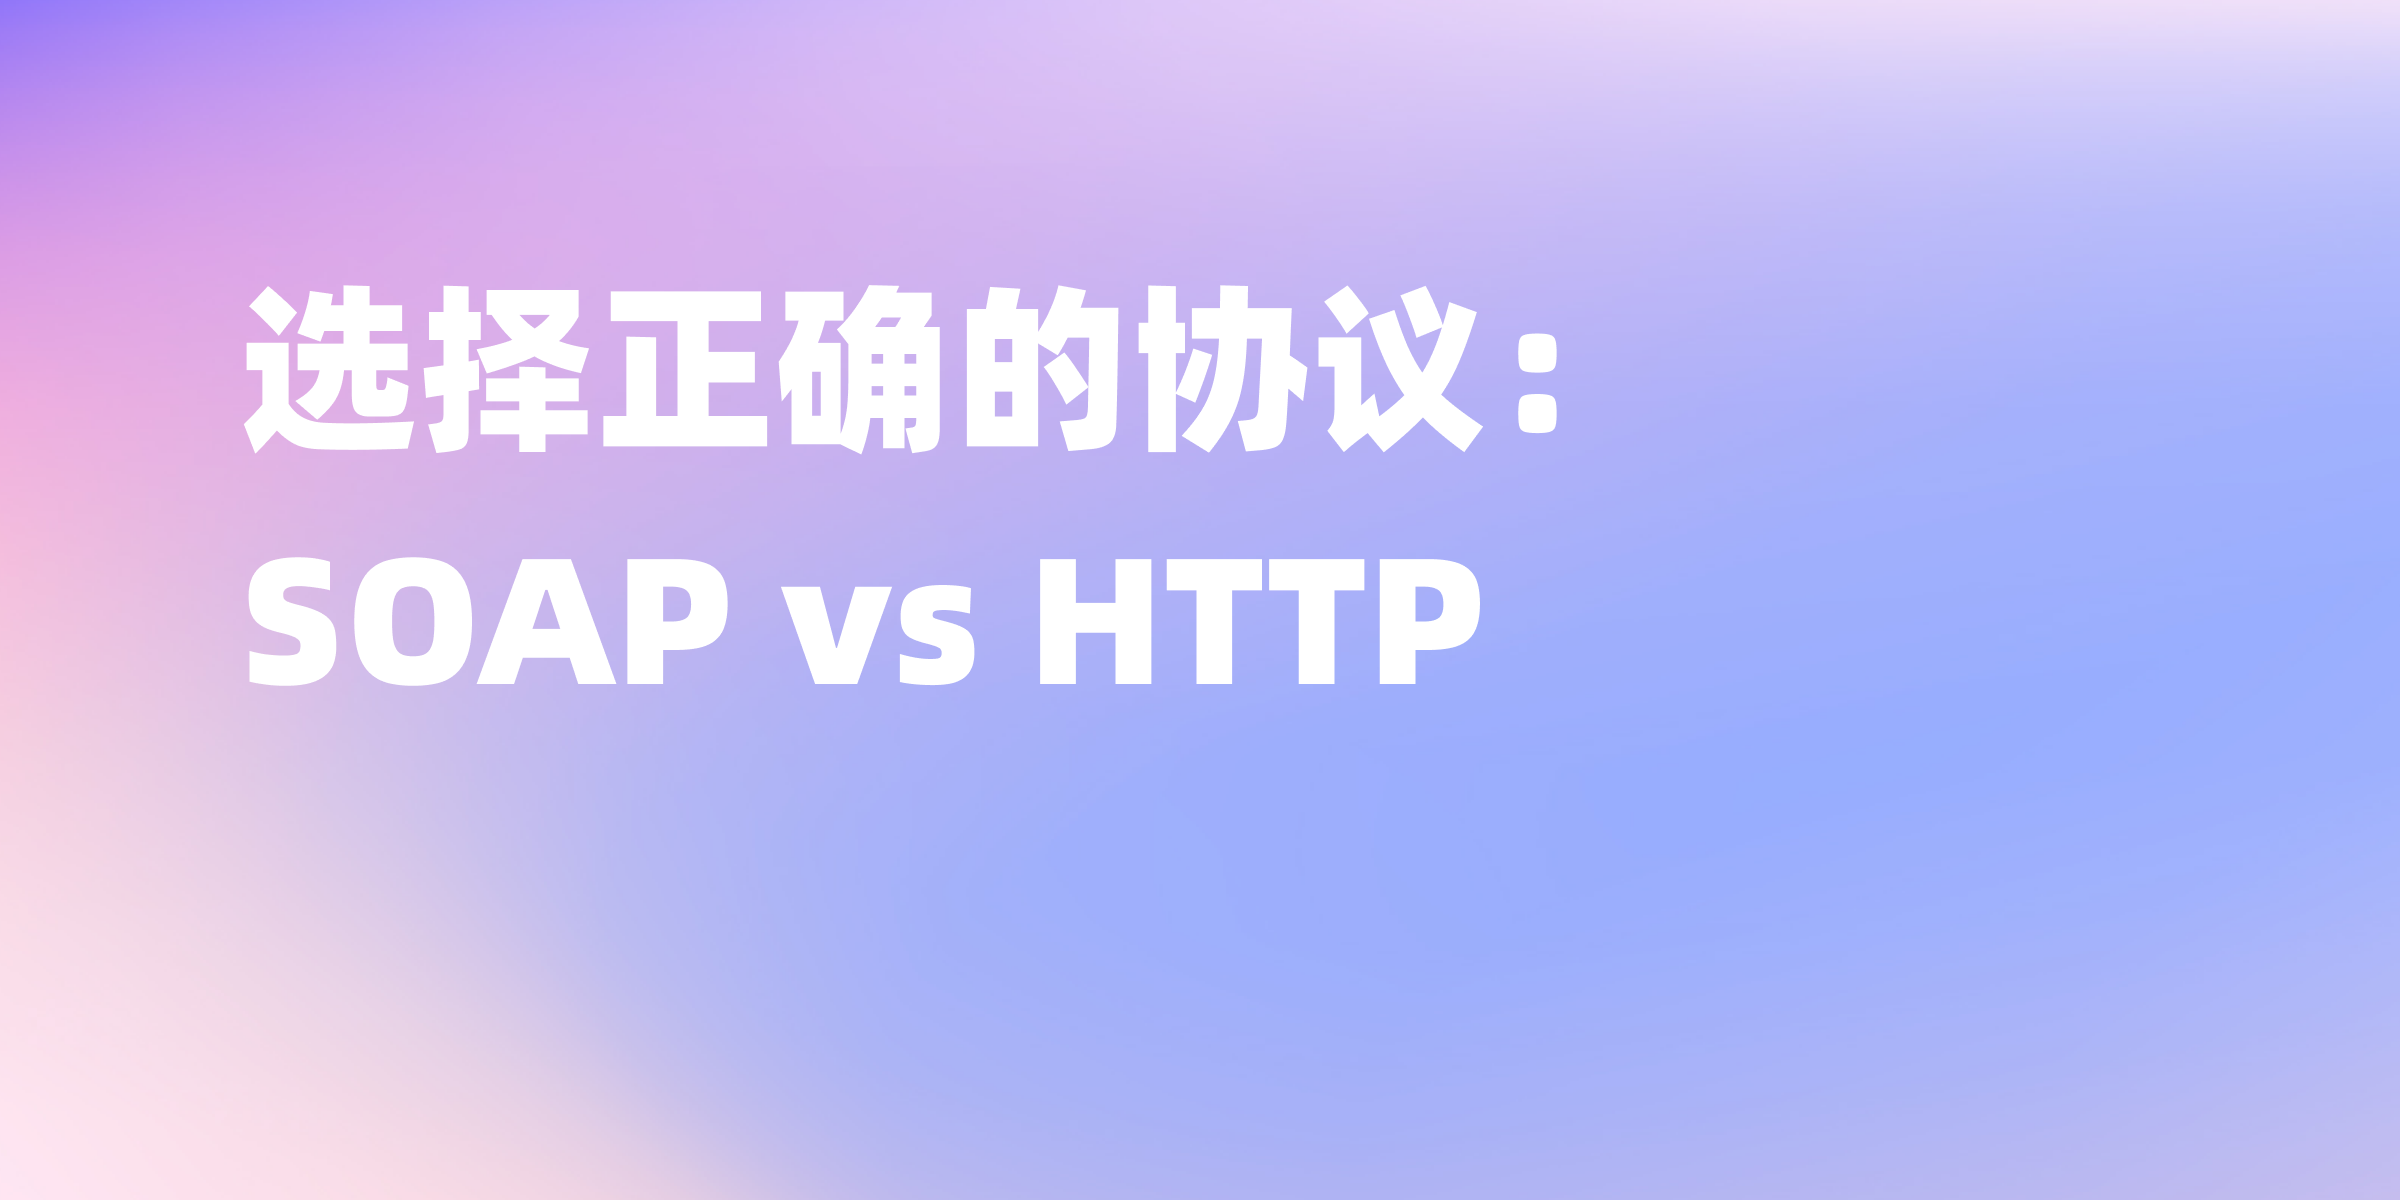 SOAP 协议和 HTTP 协议：分析比较